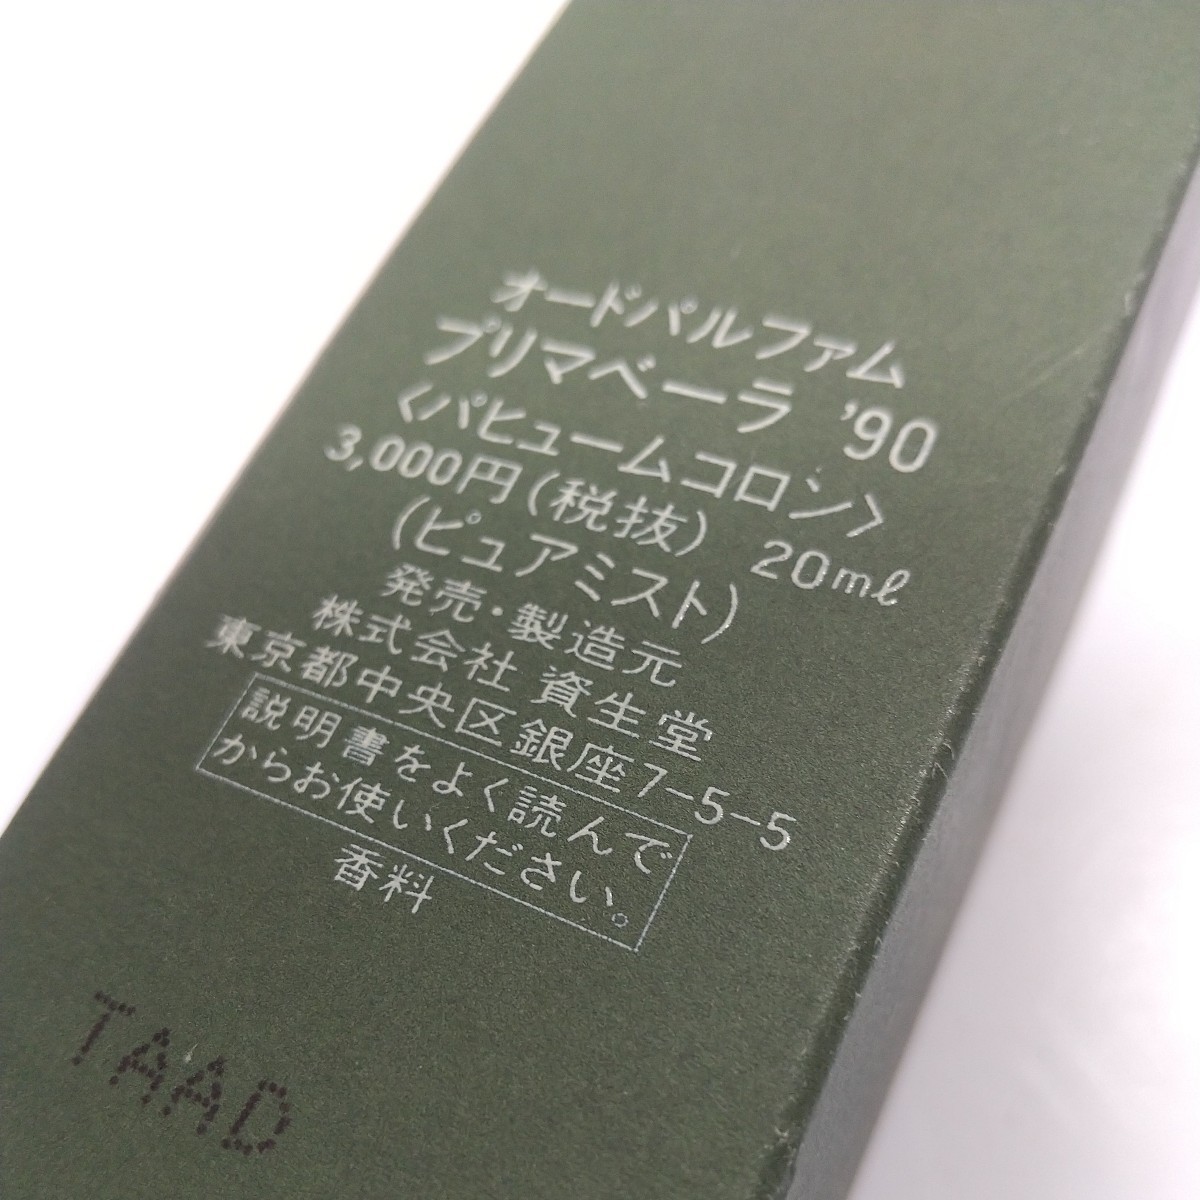 G190 perfume * Shiseido [ Prima beige la*90]o-do Pal fam20ml